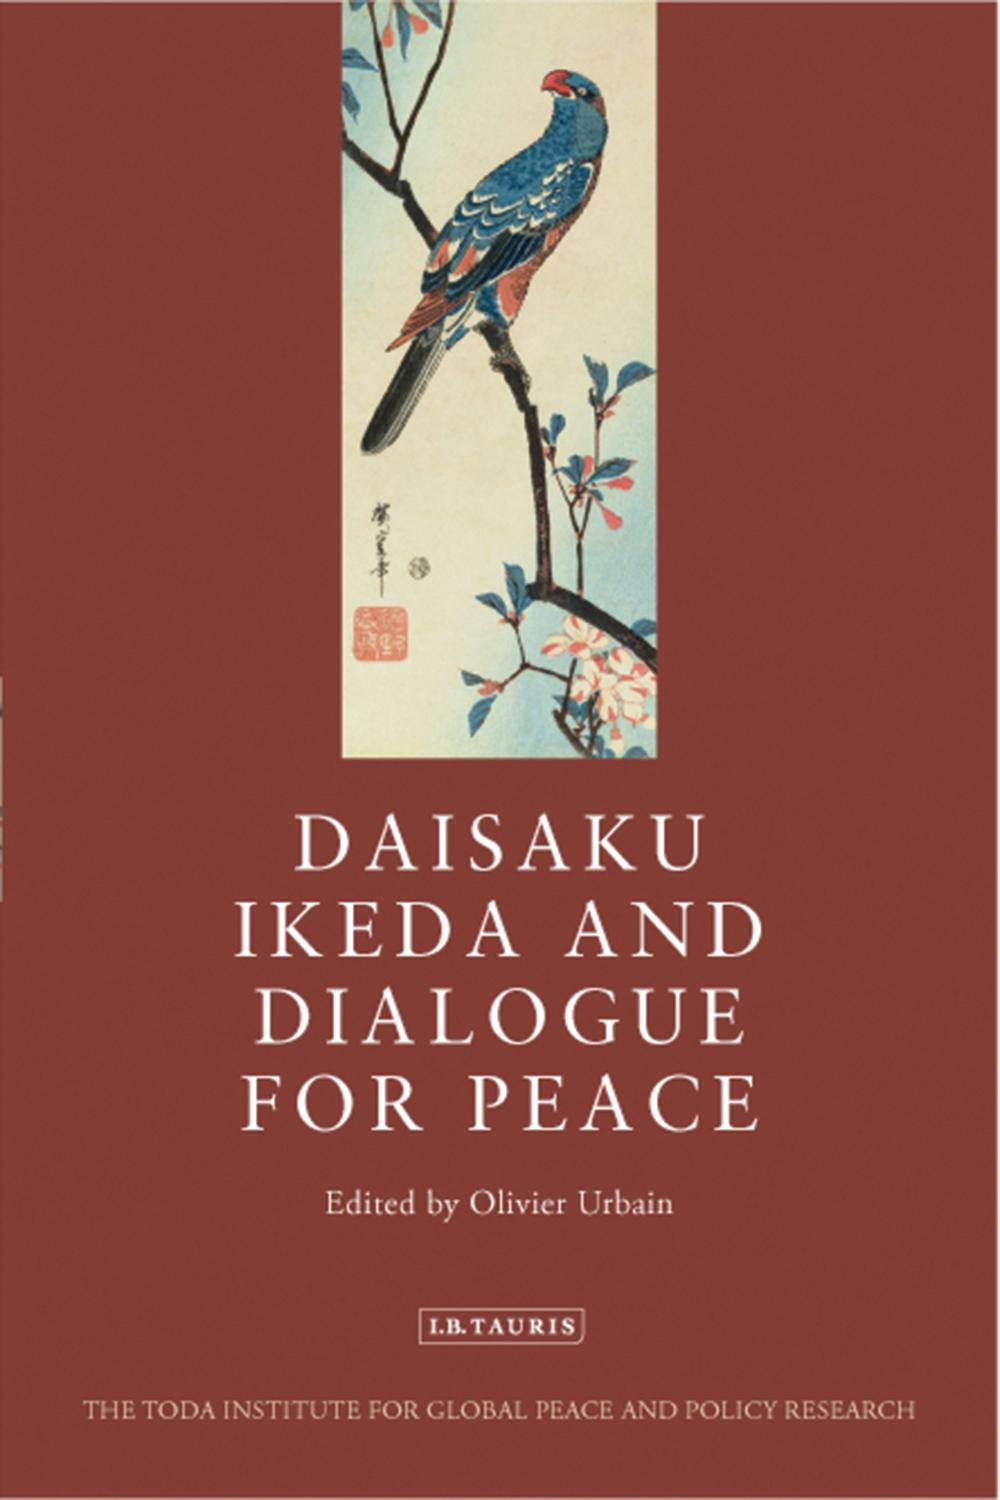 Daisaku Ikeda and Dialogue for Peace - Olivier Urbain